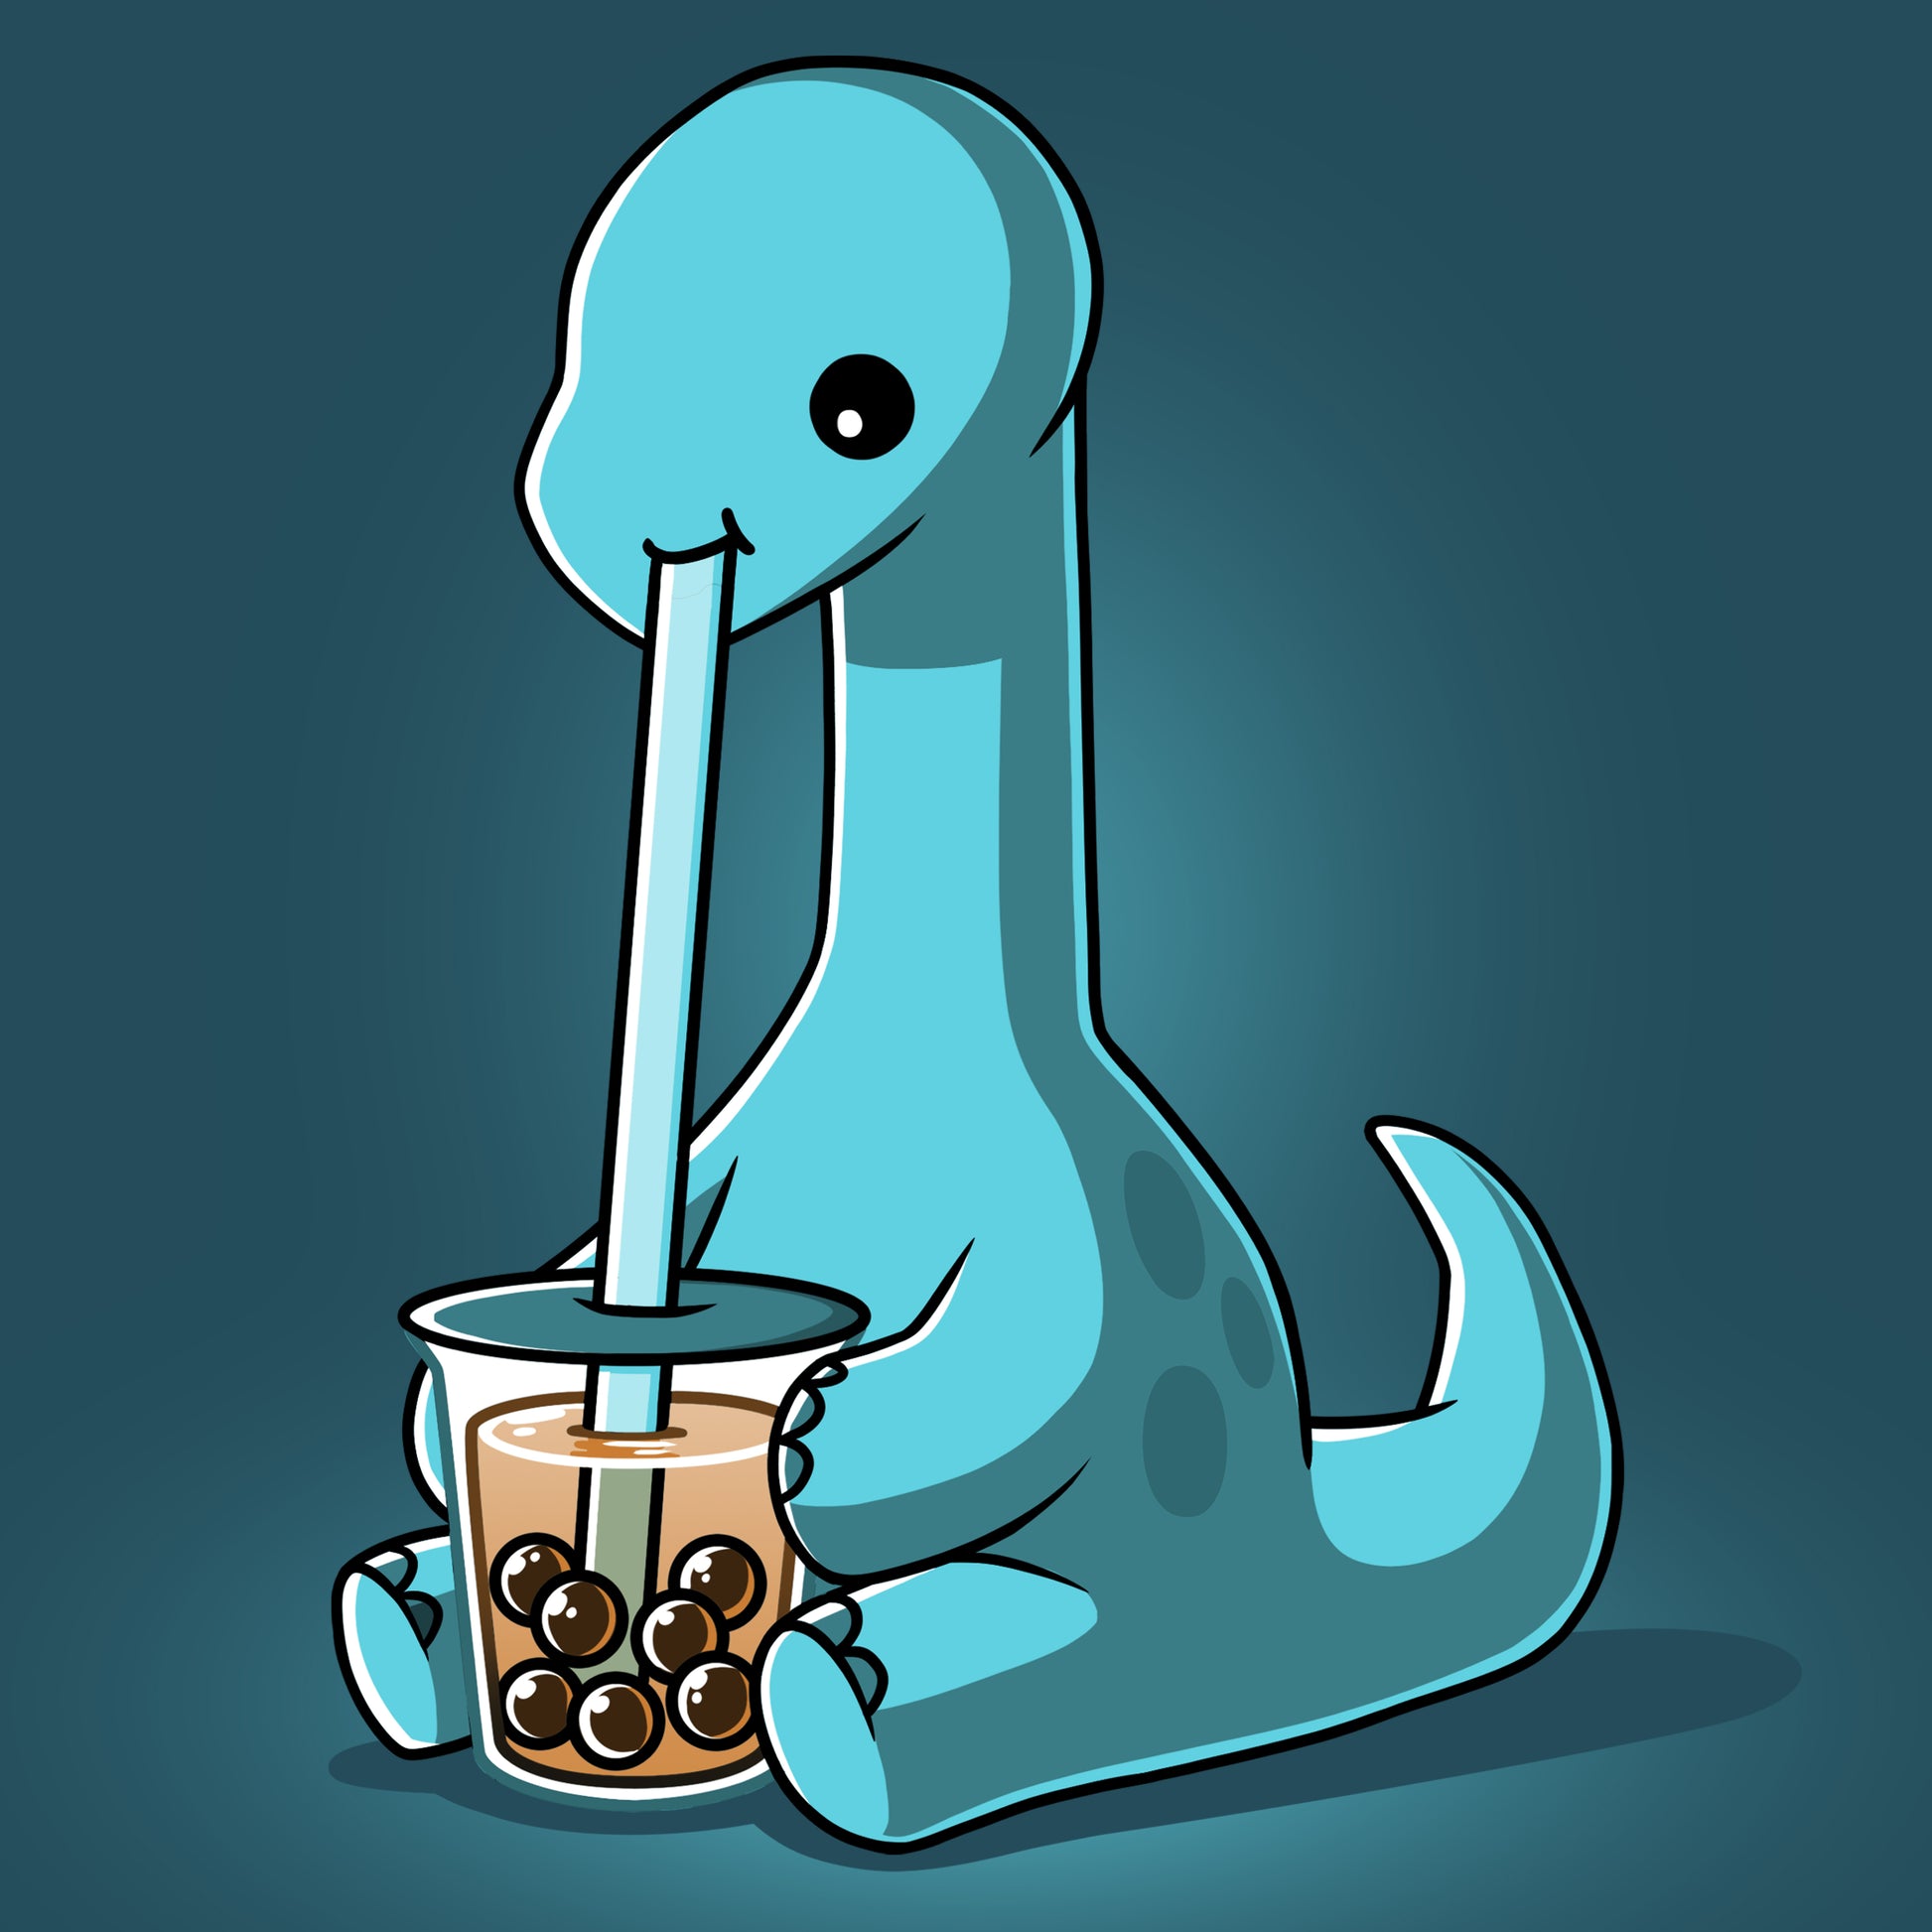 A Boba Dinosaur-wearing TeeTurtle cartoon dinosaur sips coffee from a straw.